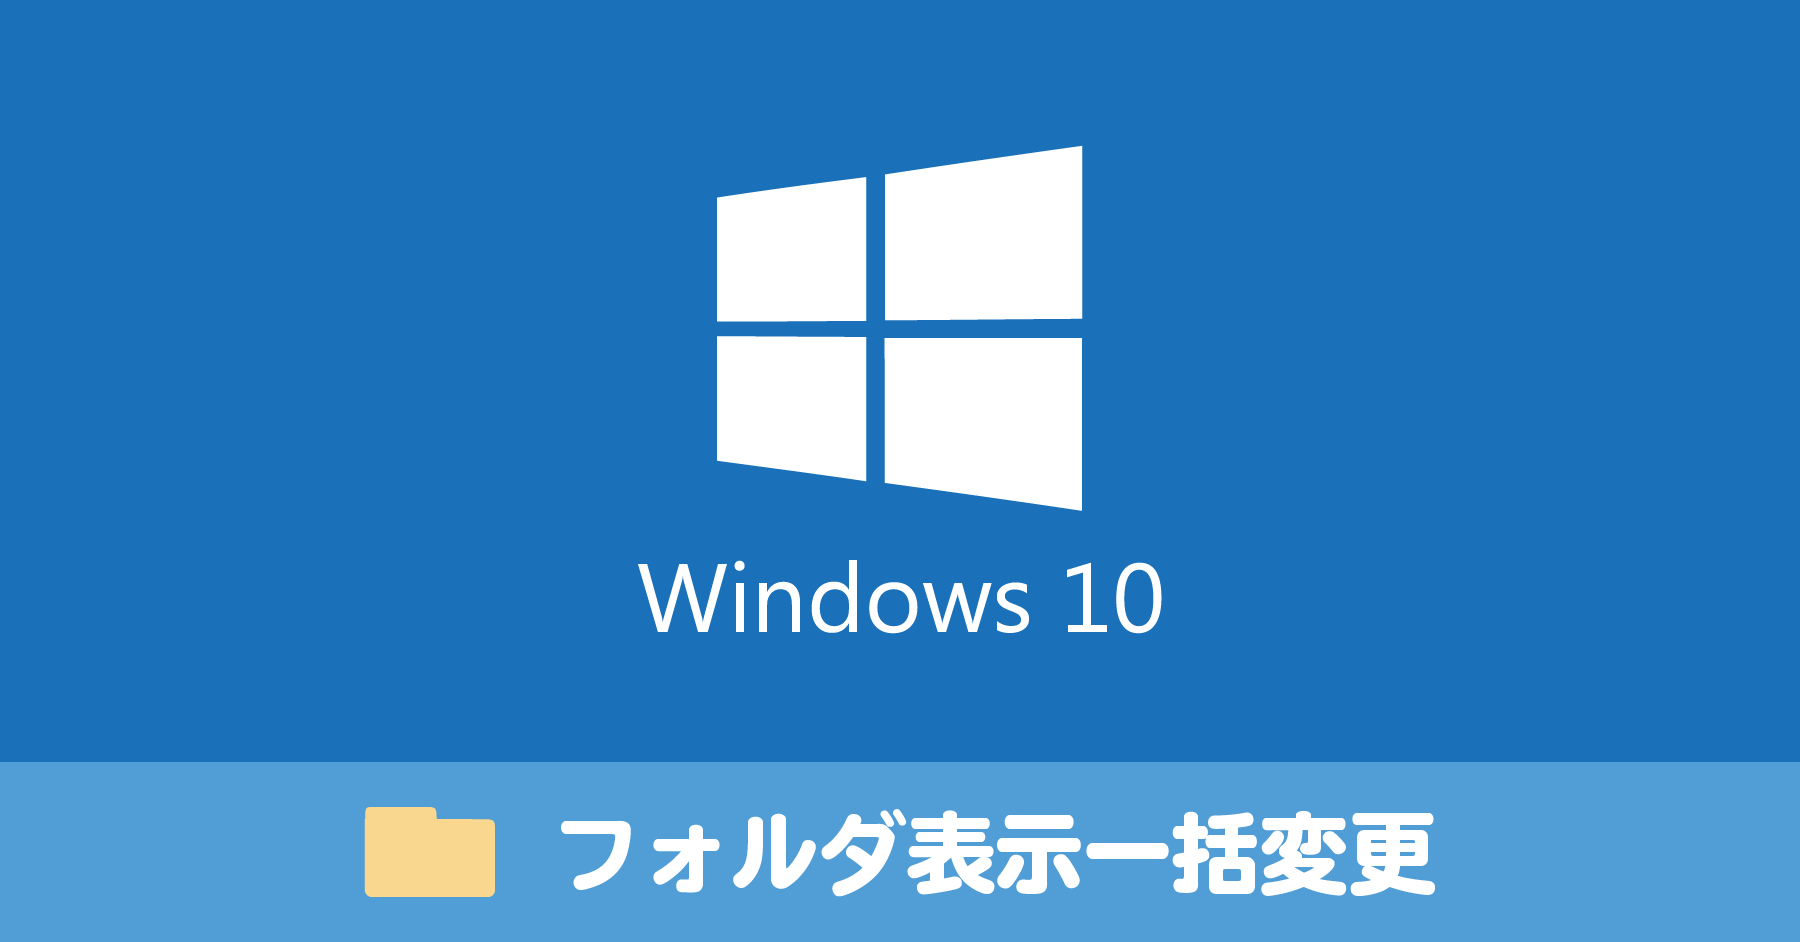 Windows 10 でフォルダ表示の設定を他のフォルダにも適用させる方法